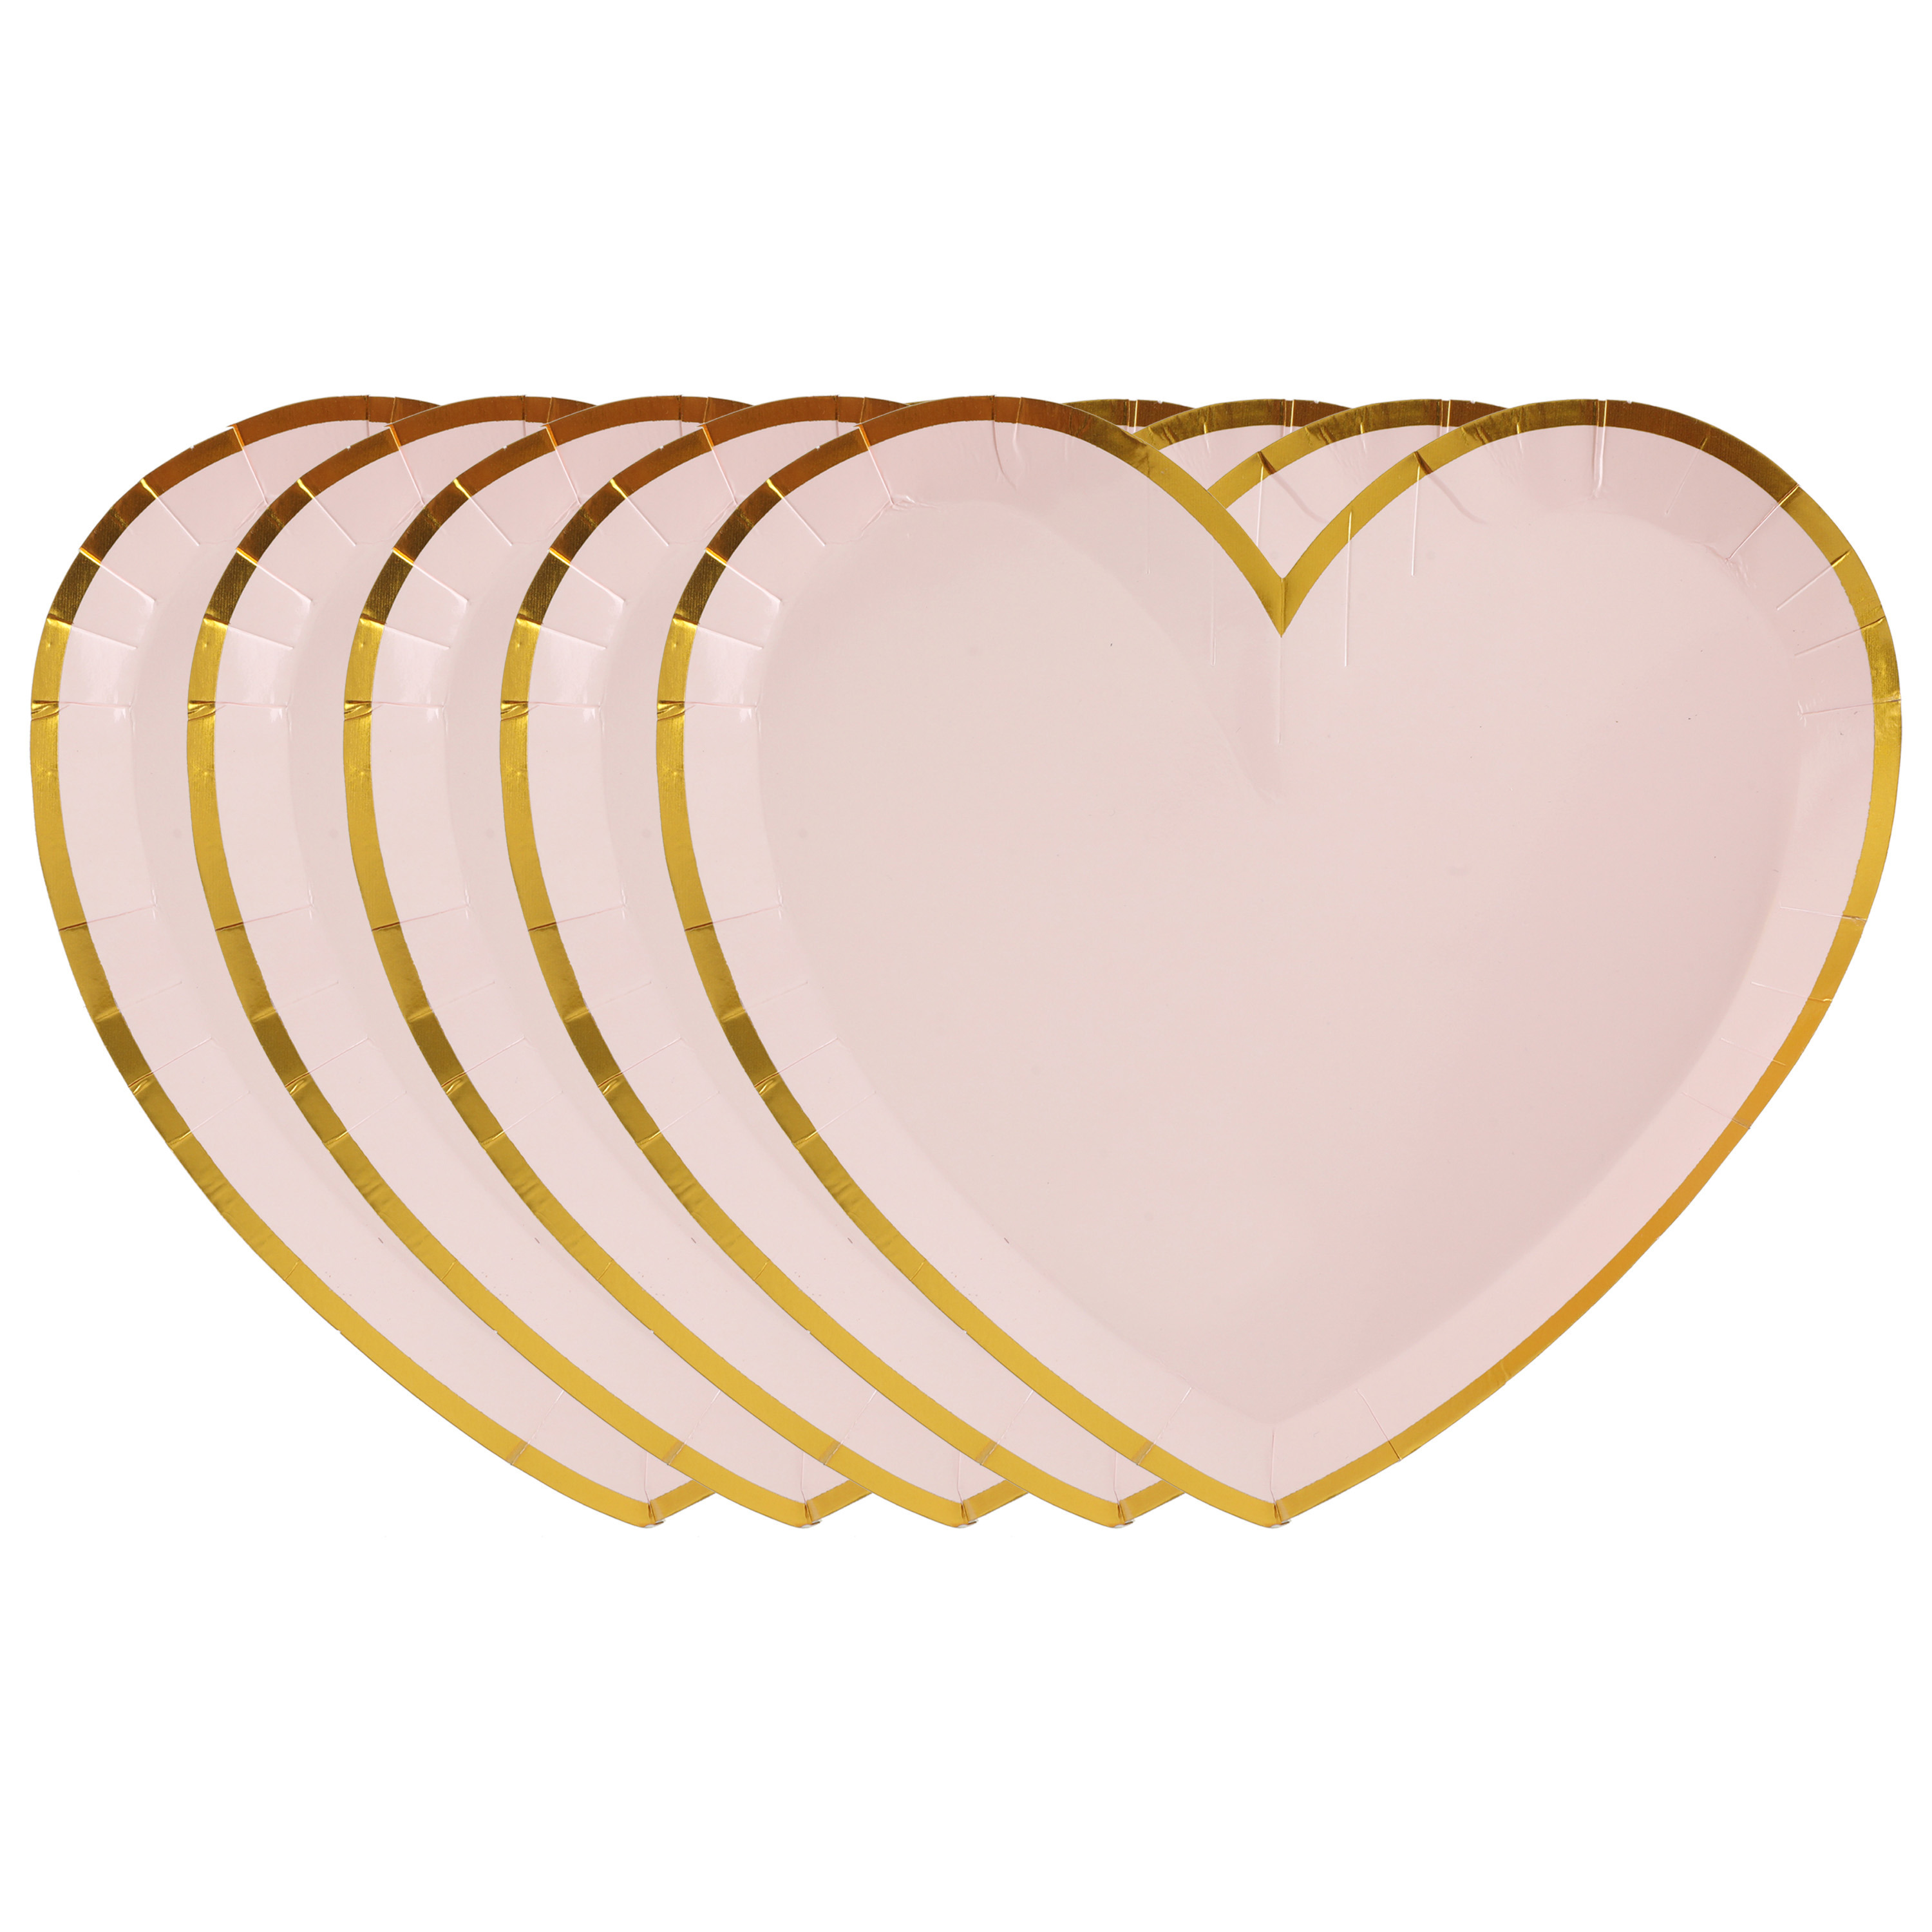 Feest wegwerpbordjes - hartje - 50x stuks - 23 cm - roze/goud